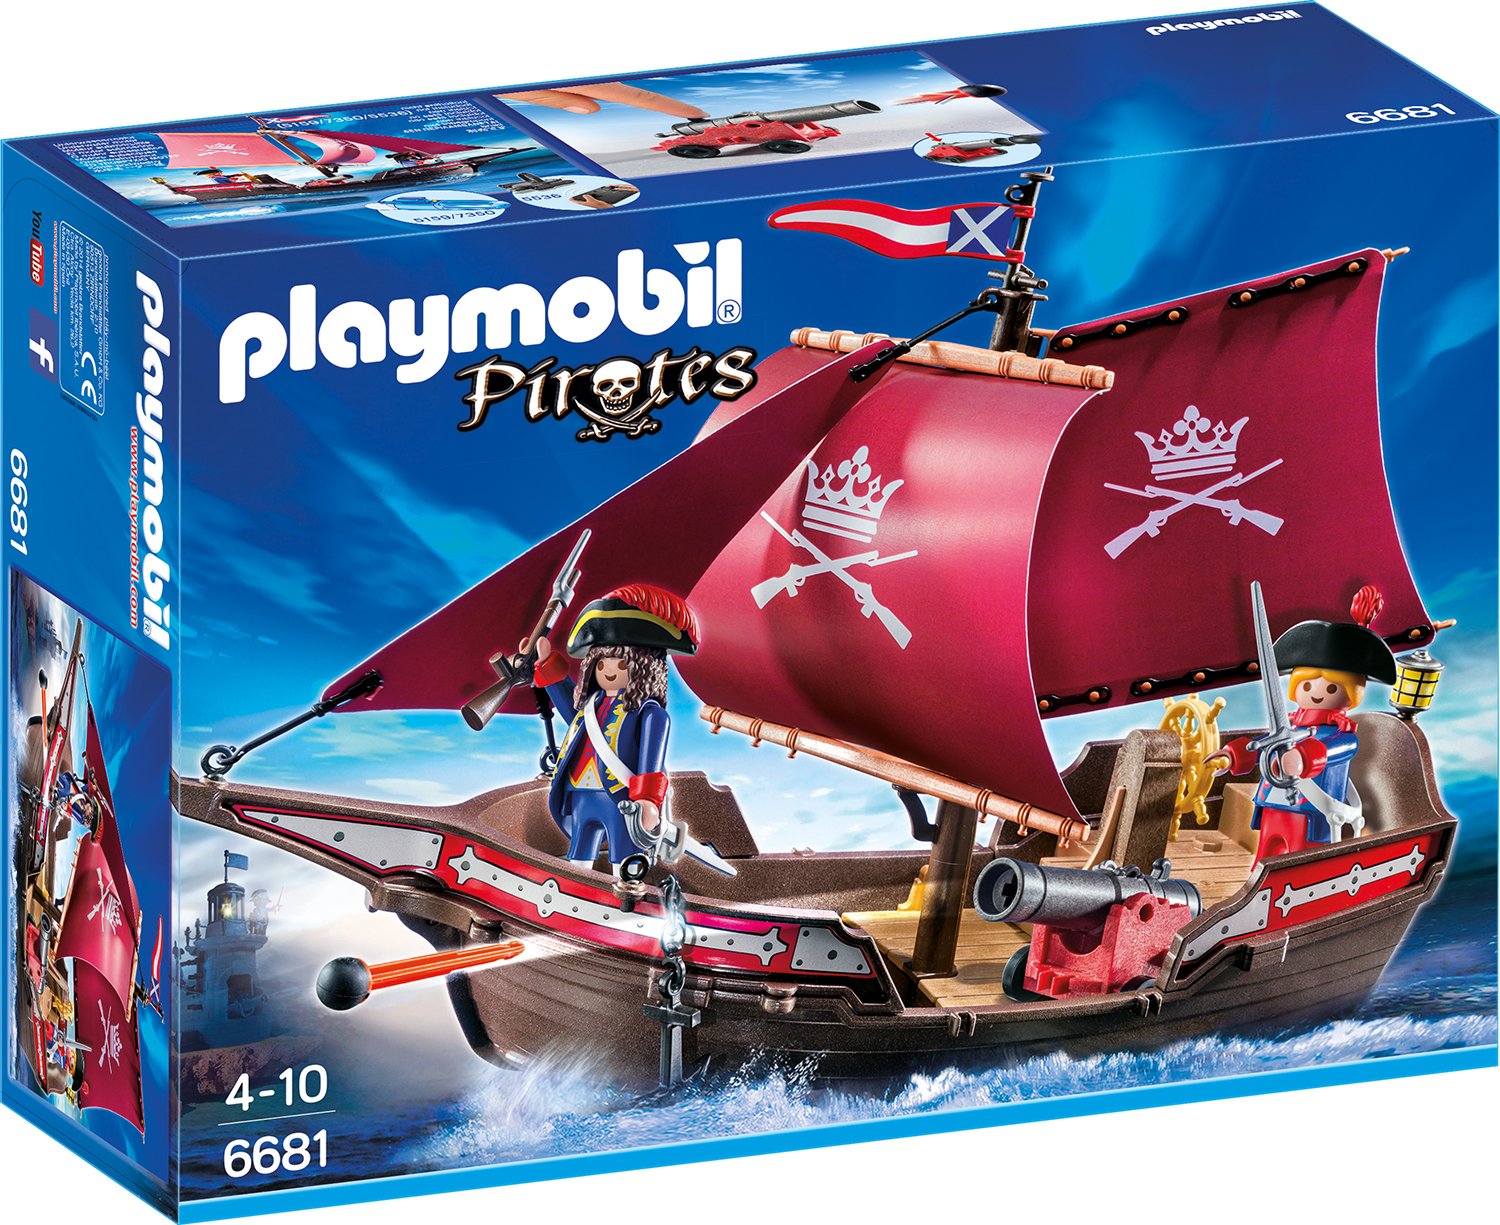 Playmobil Pirates Soldiers Patrol Boat